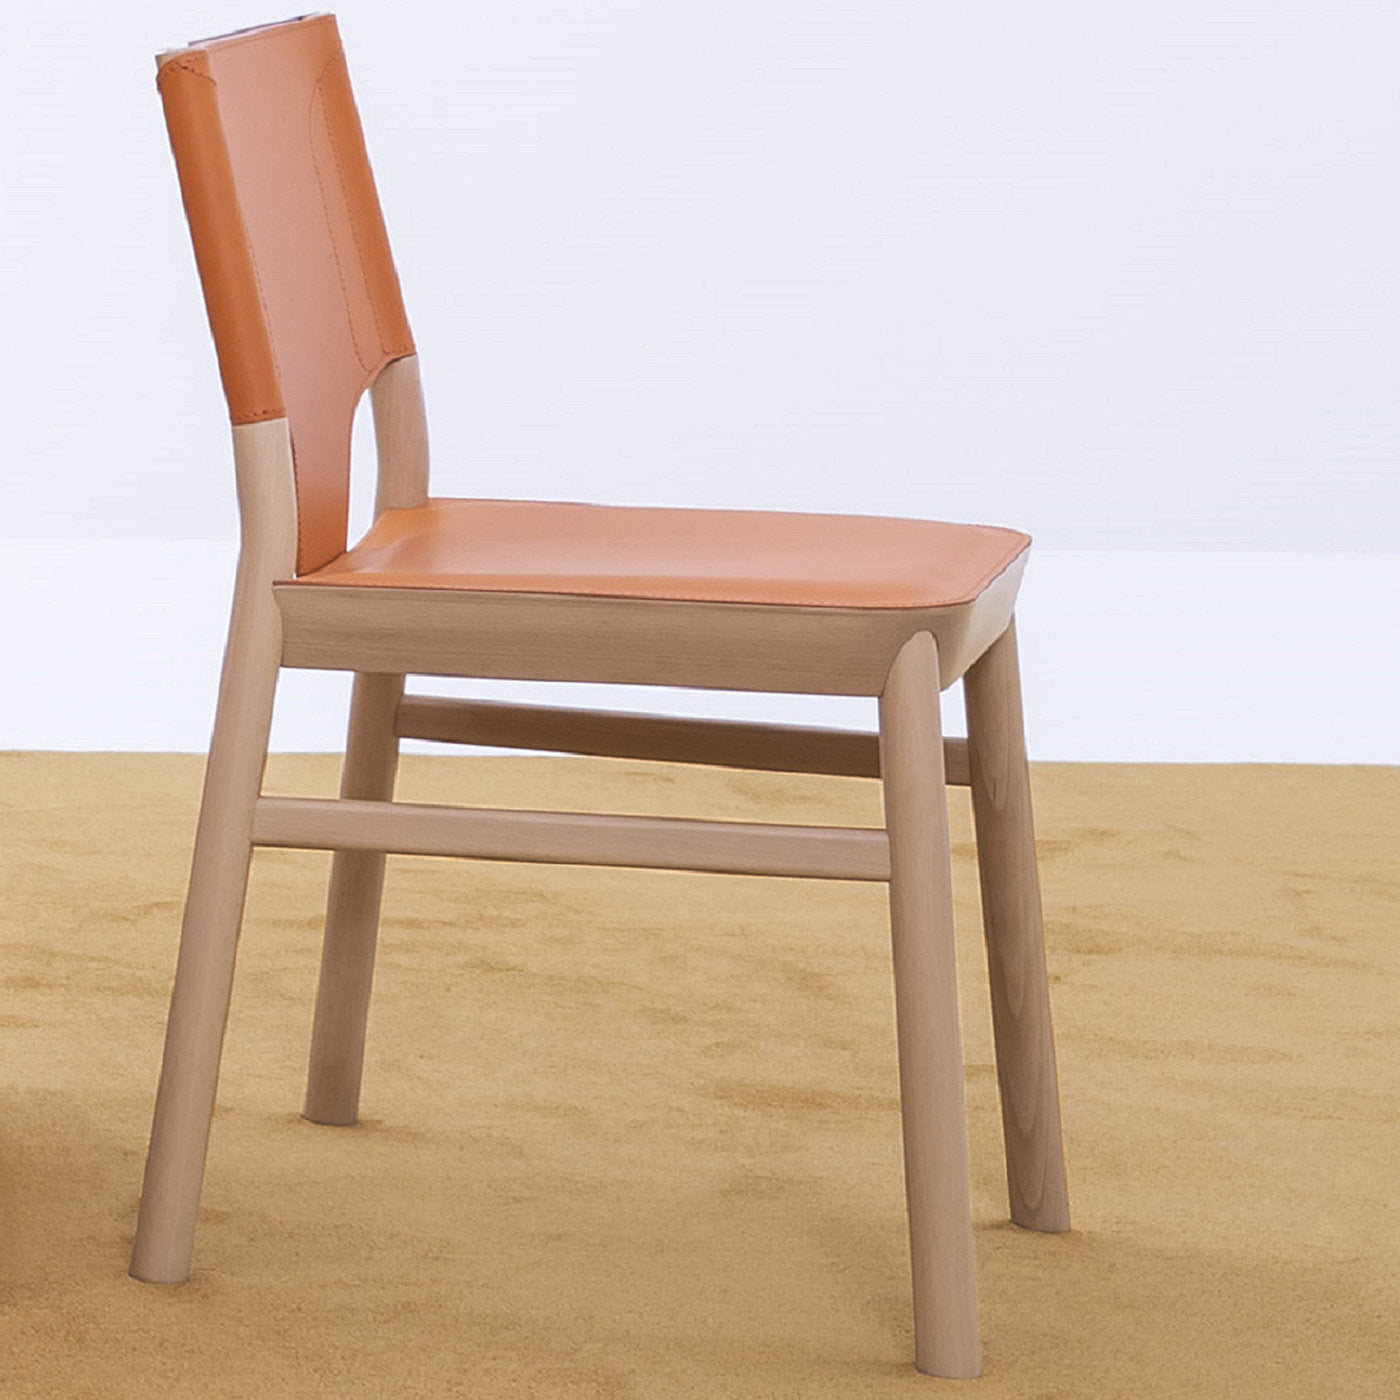 Marimba Dining Chair by Emilio Nanni - Alternative view 2